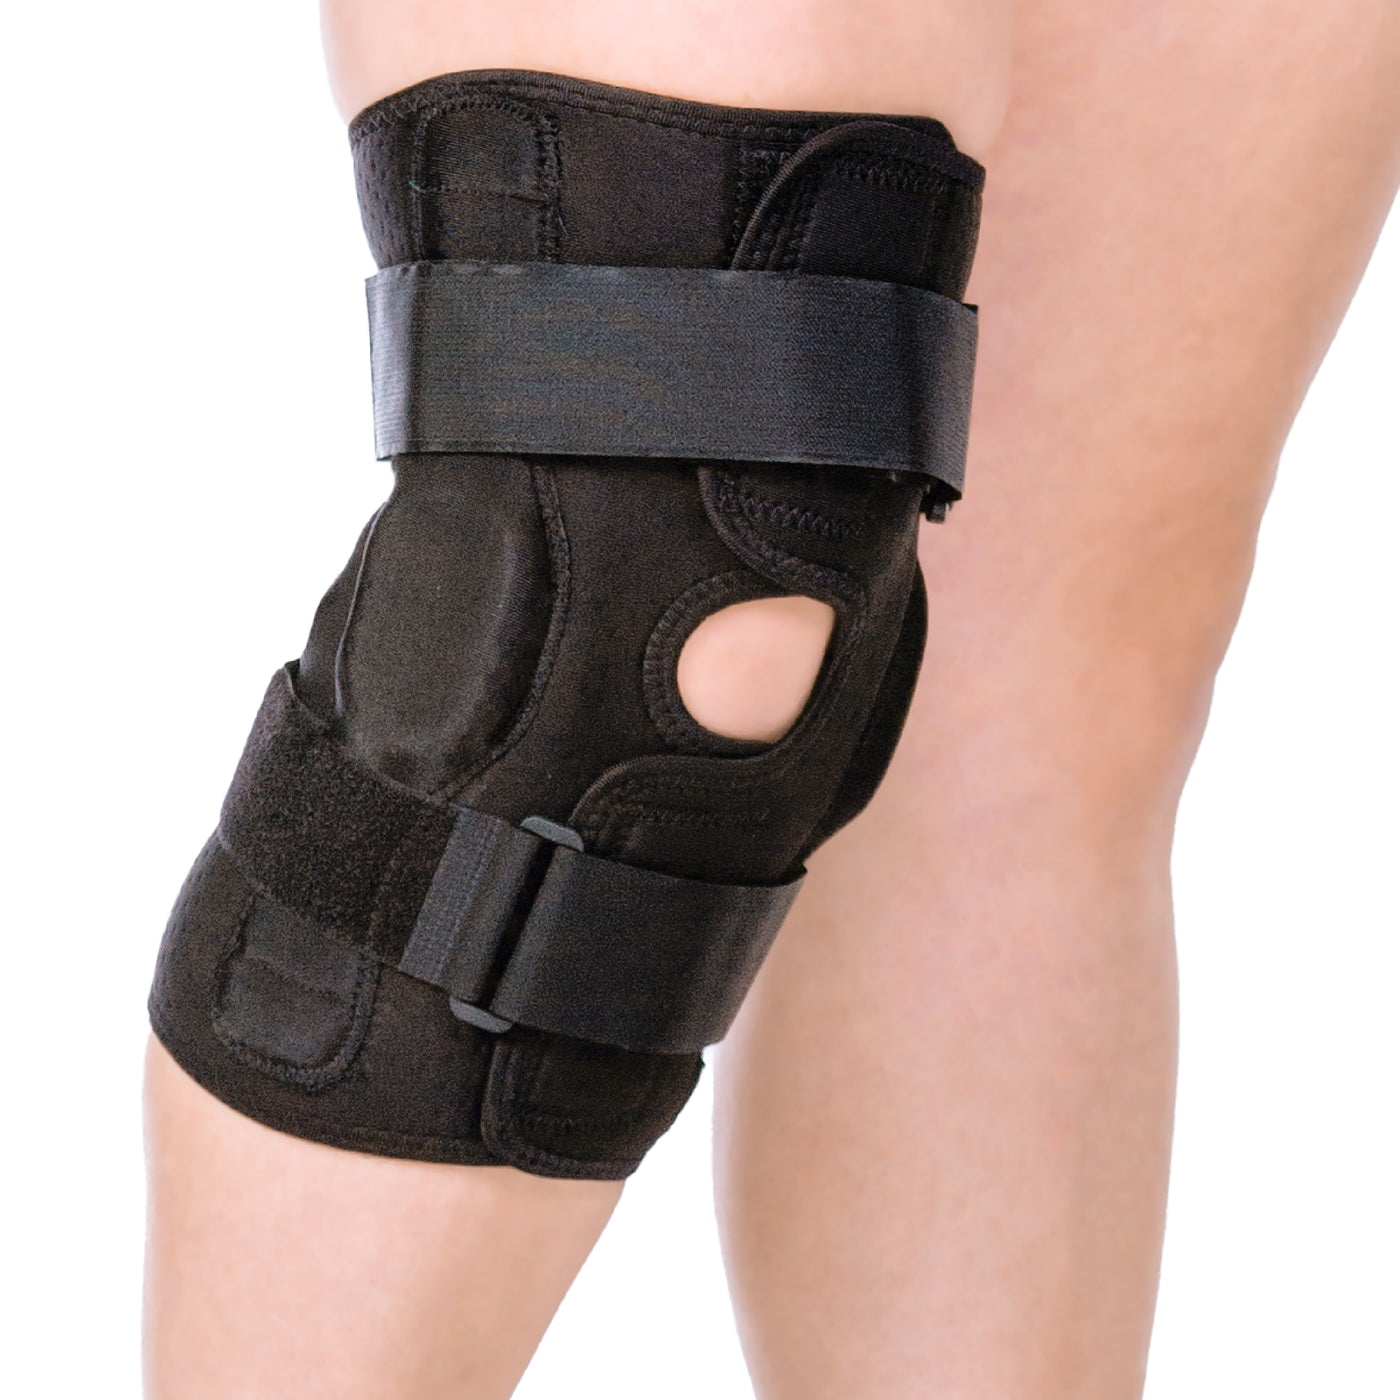 braceability torn meniscus knee brace to prevent hyperextension